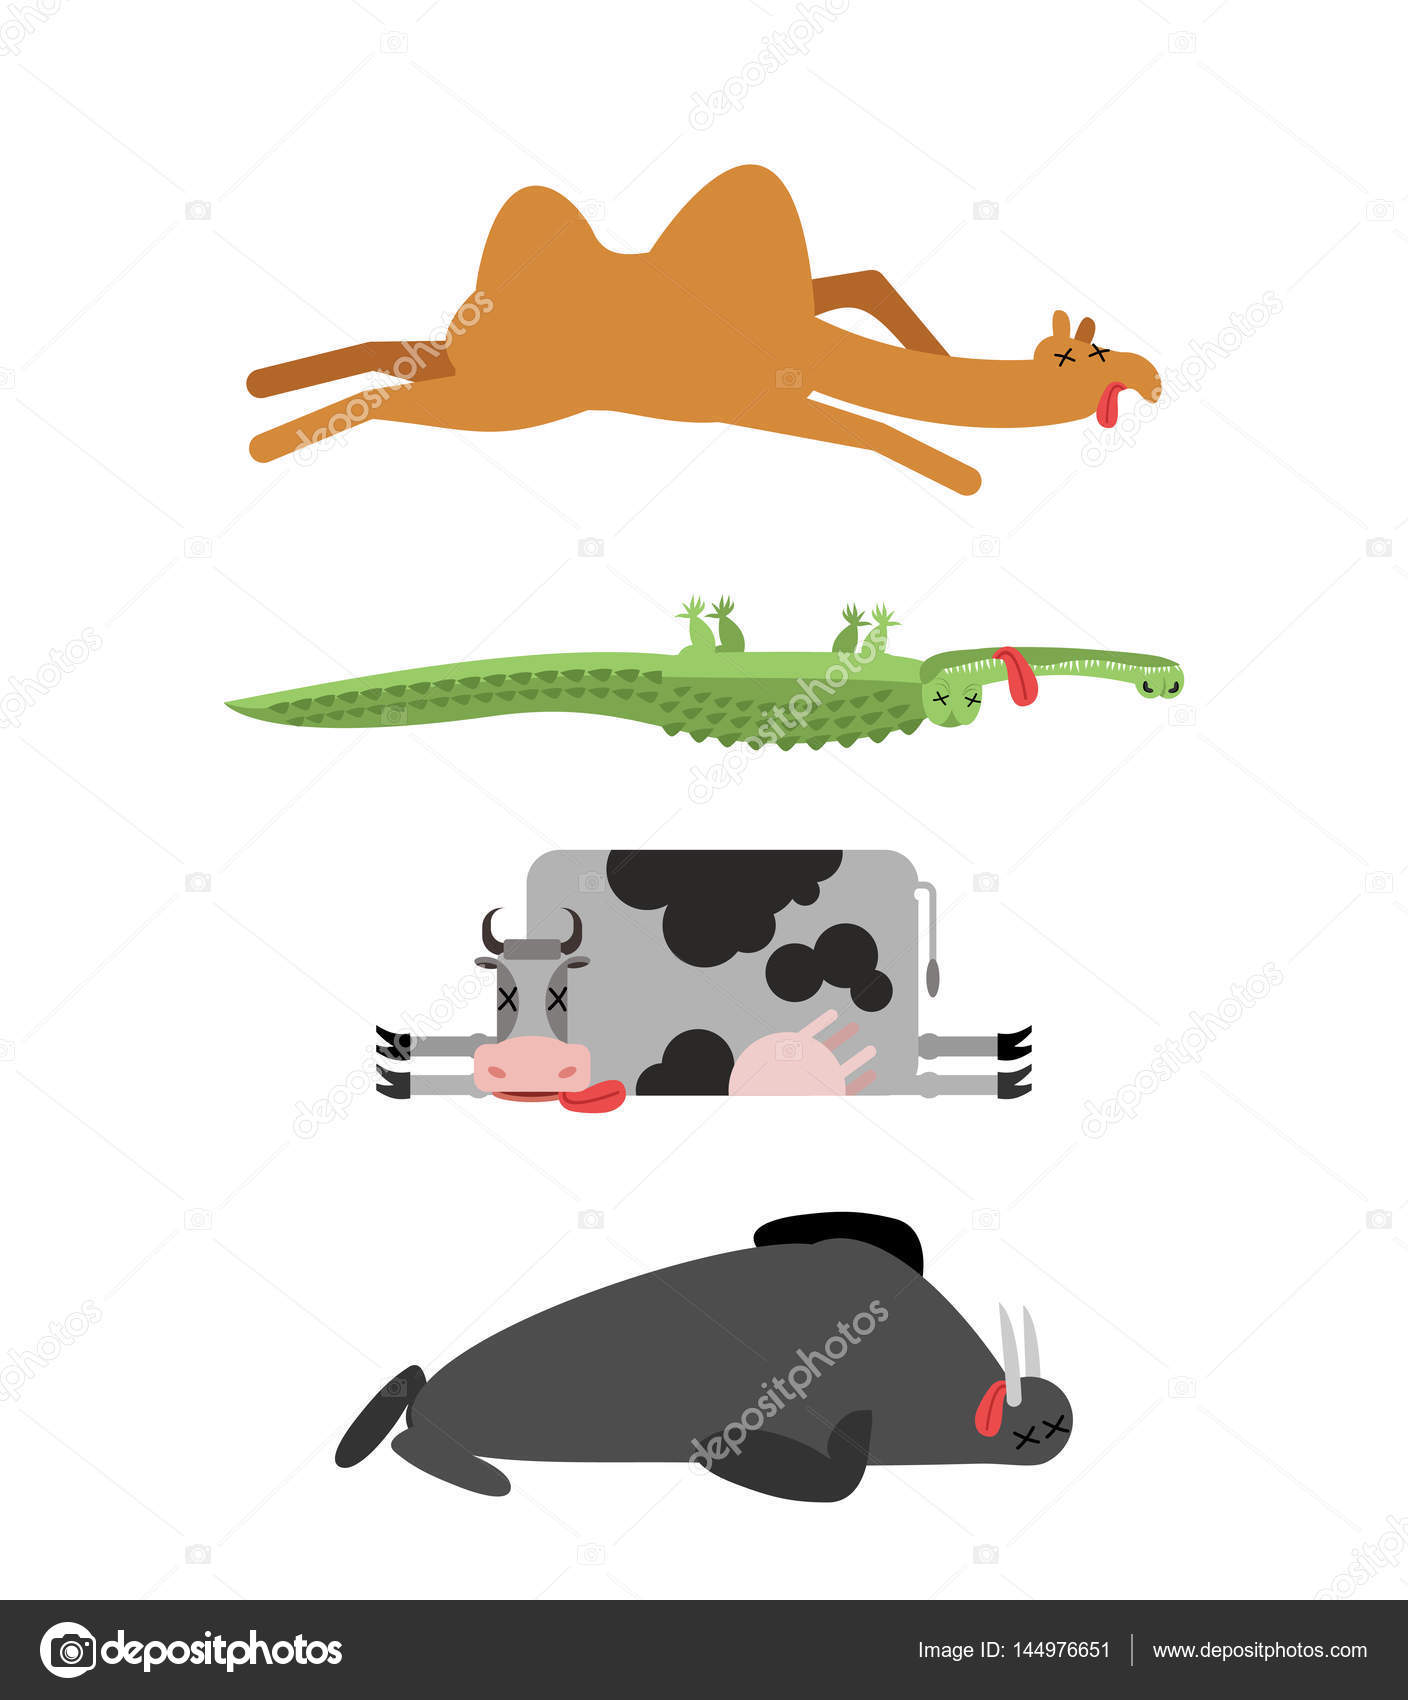 Animales muertos imágenes de stock de arte vectorial | Depositphotos